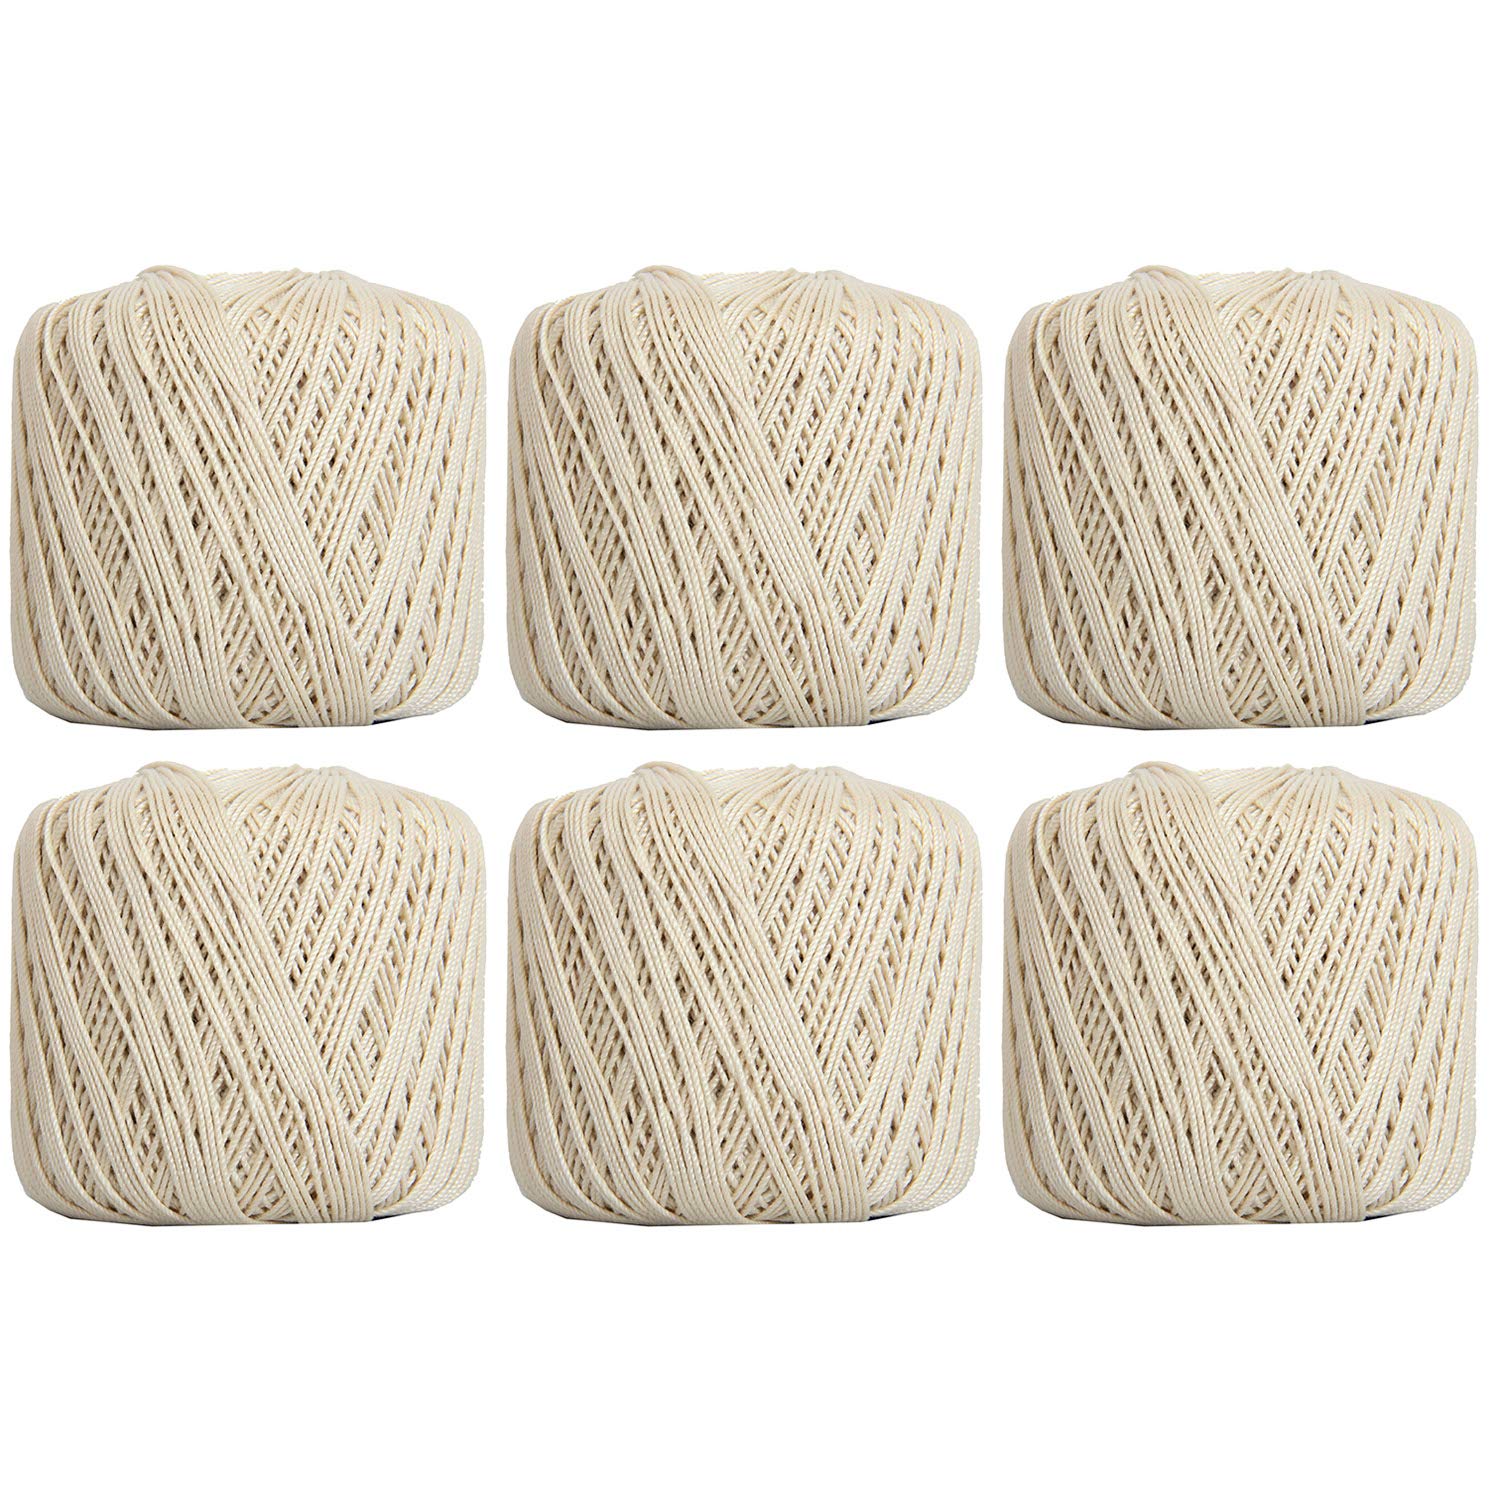 Threadart 6 Ball Pack Threadart 100 Pure Cotton Crochet Thread - Size 3 - Color 2 - Natural - Size 10 And 3 - Singles And Bulk Packs Avail